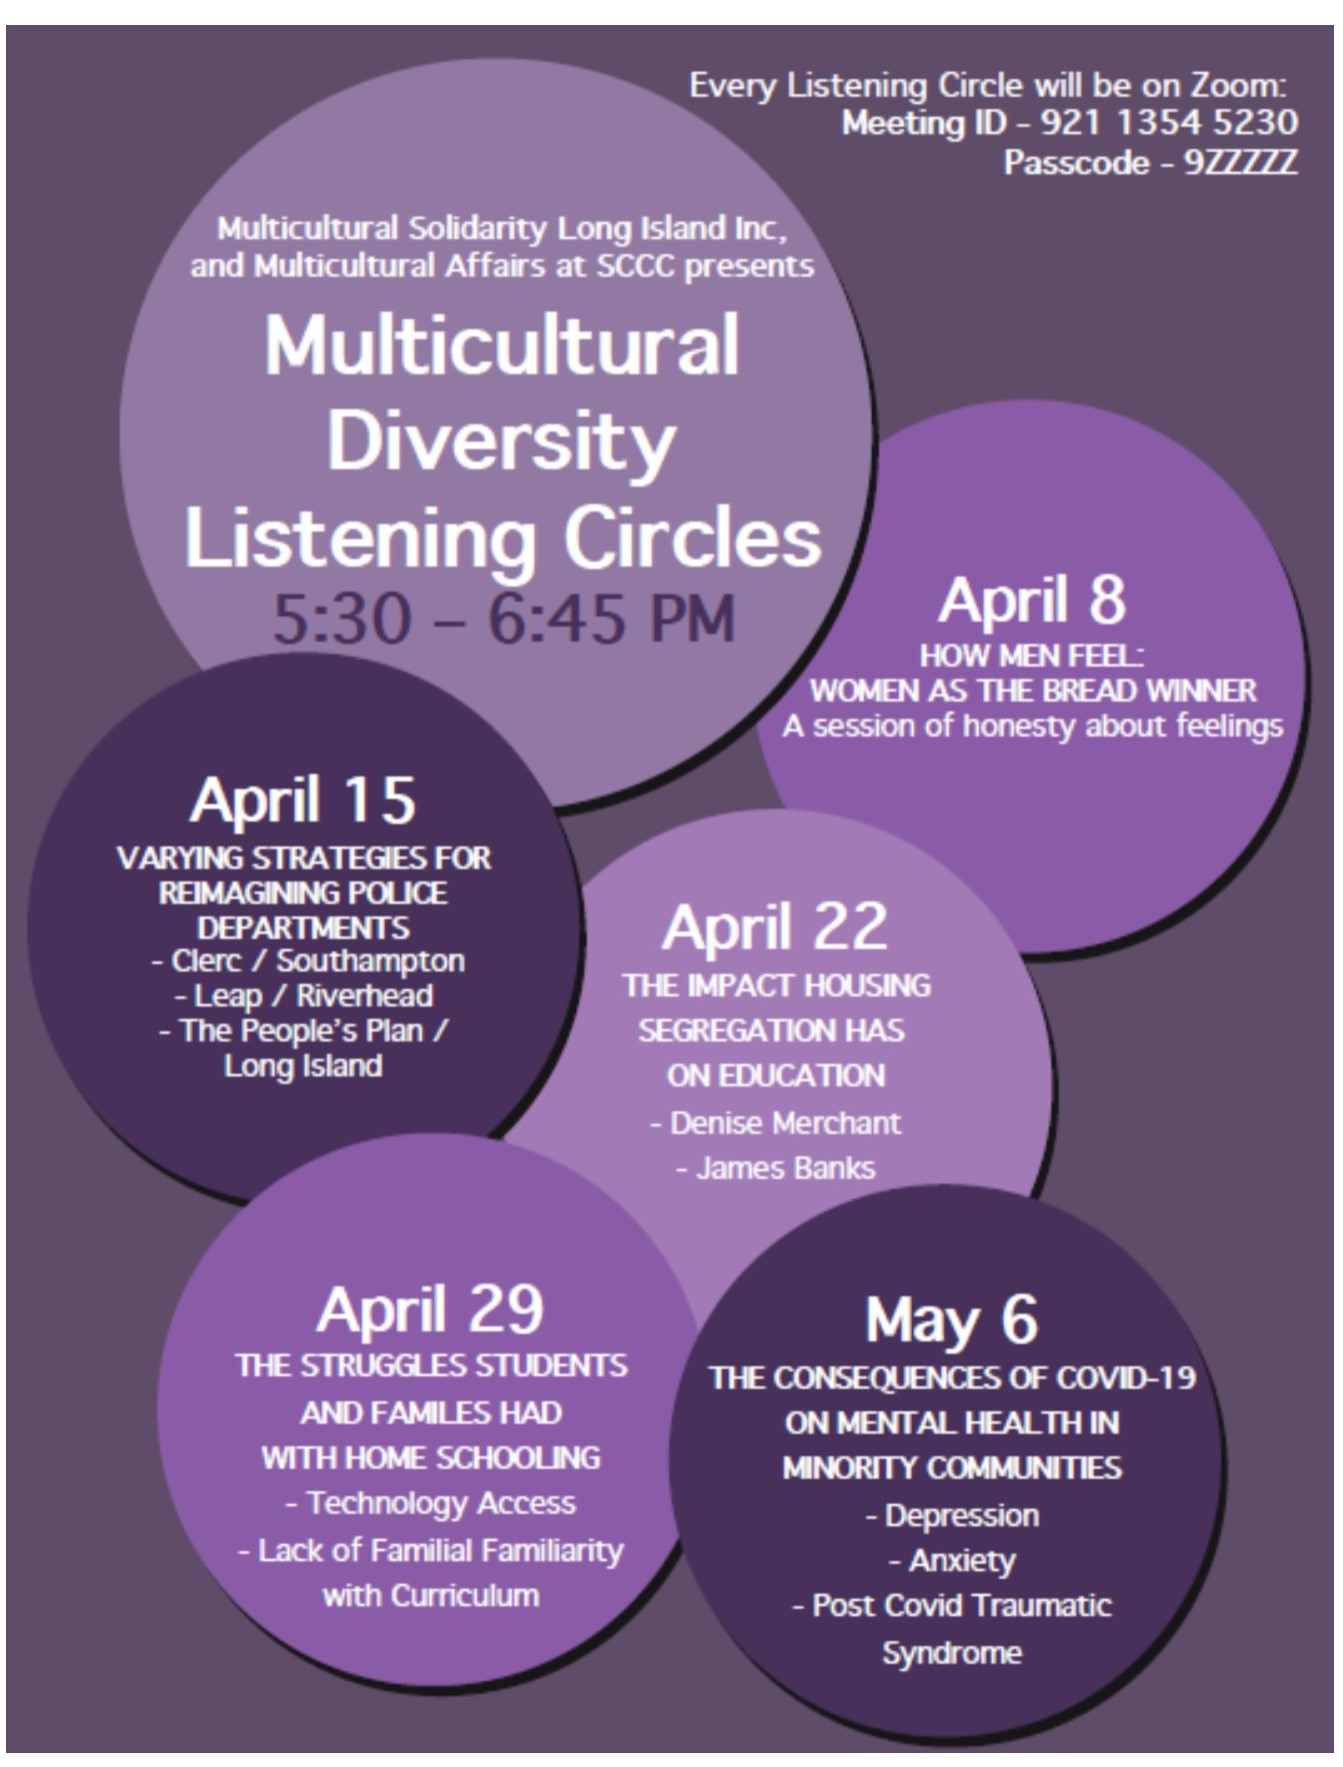 Multicultural-Diversity-Listening-Circles-2021